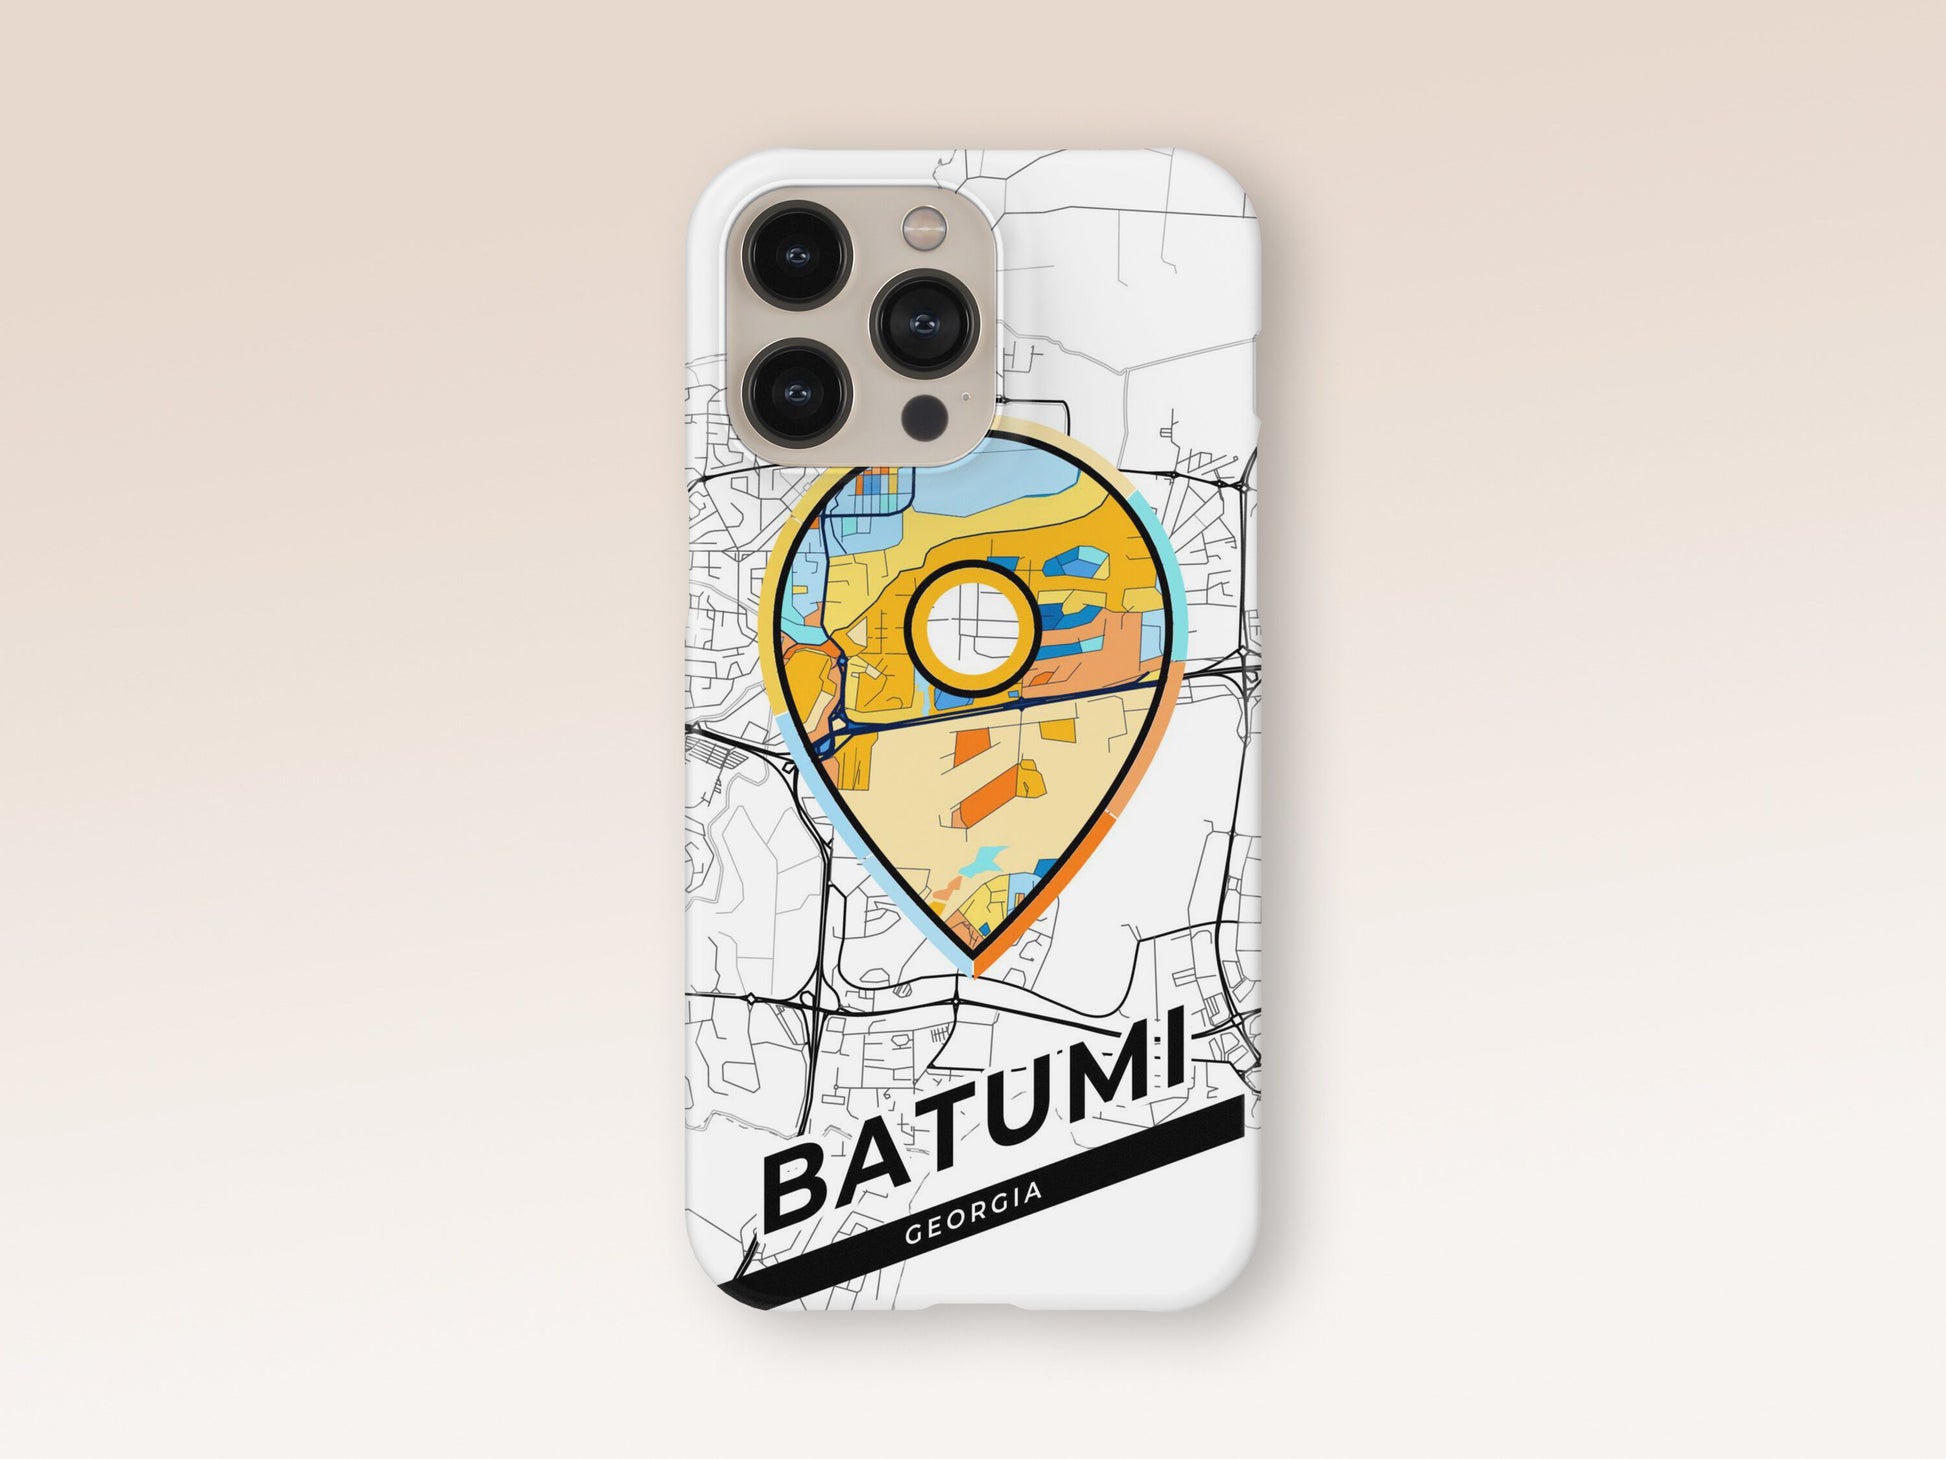 Batumi Georgia slim phone case with colorful icon. Birthday, wedding or housewarming gift. Couple match cases. 1